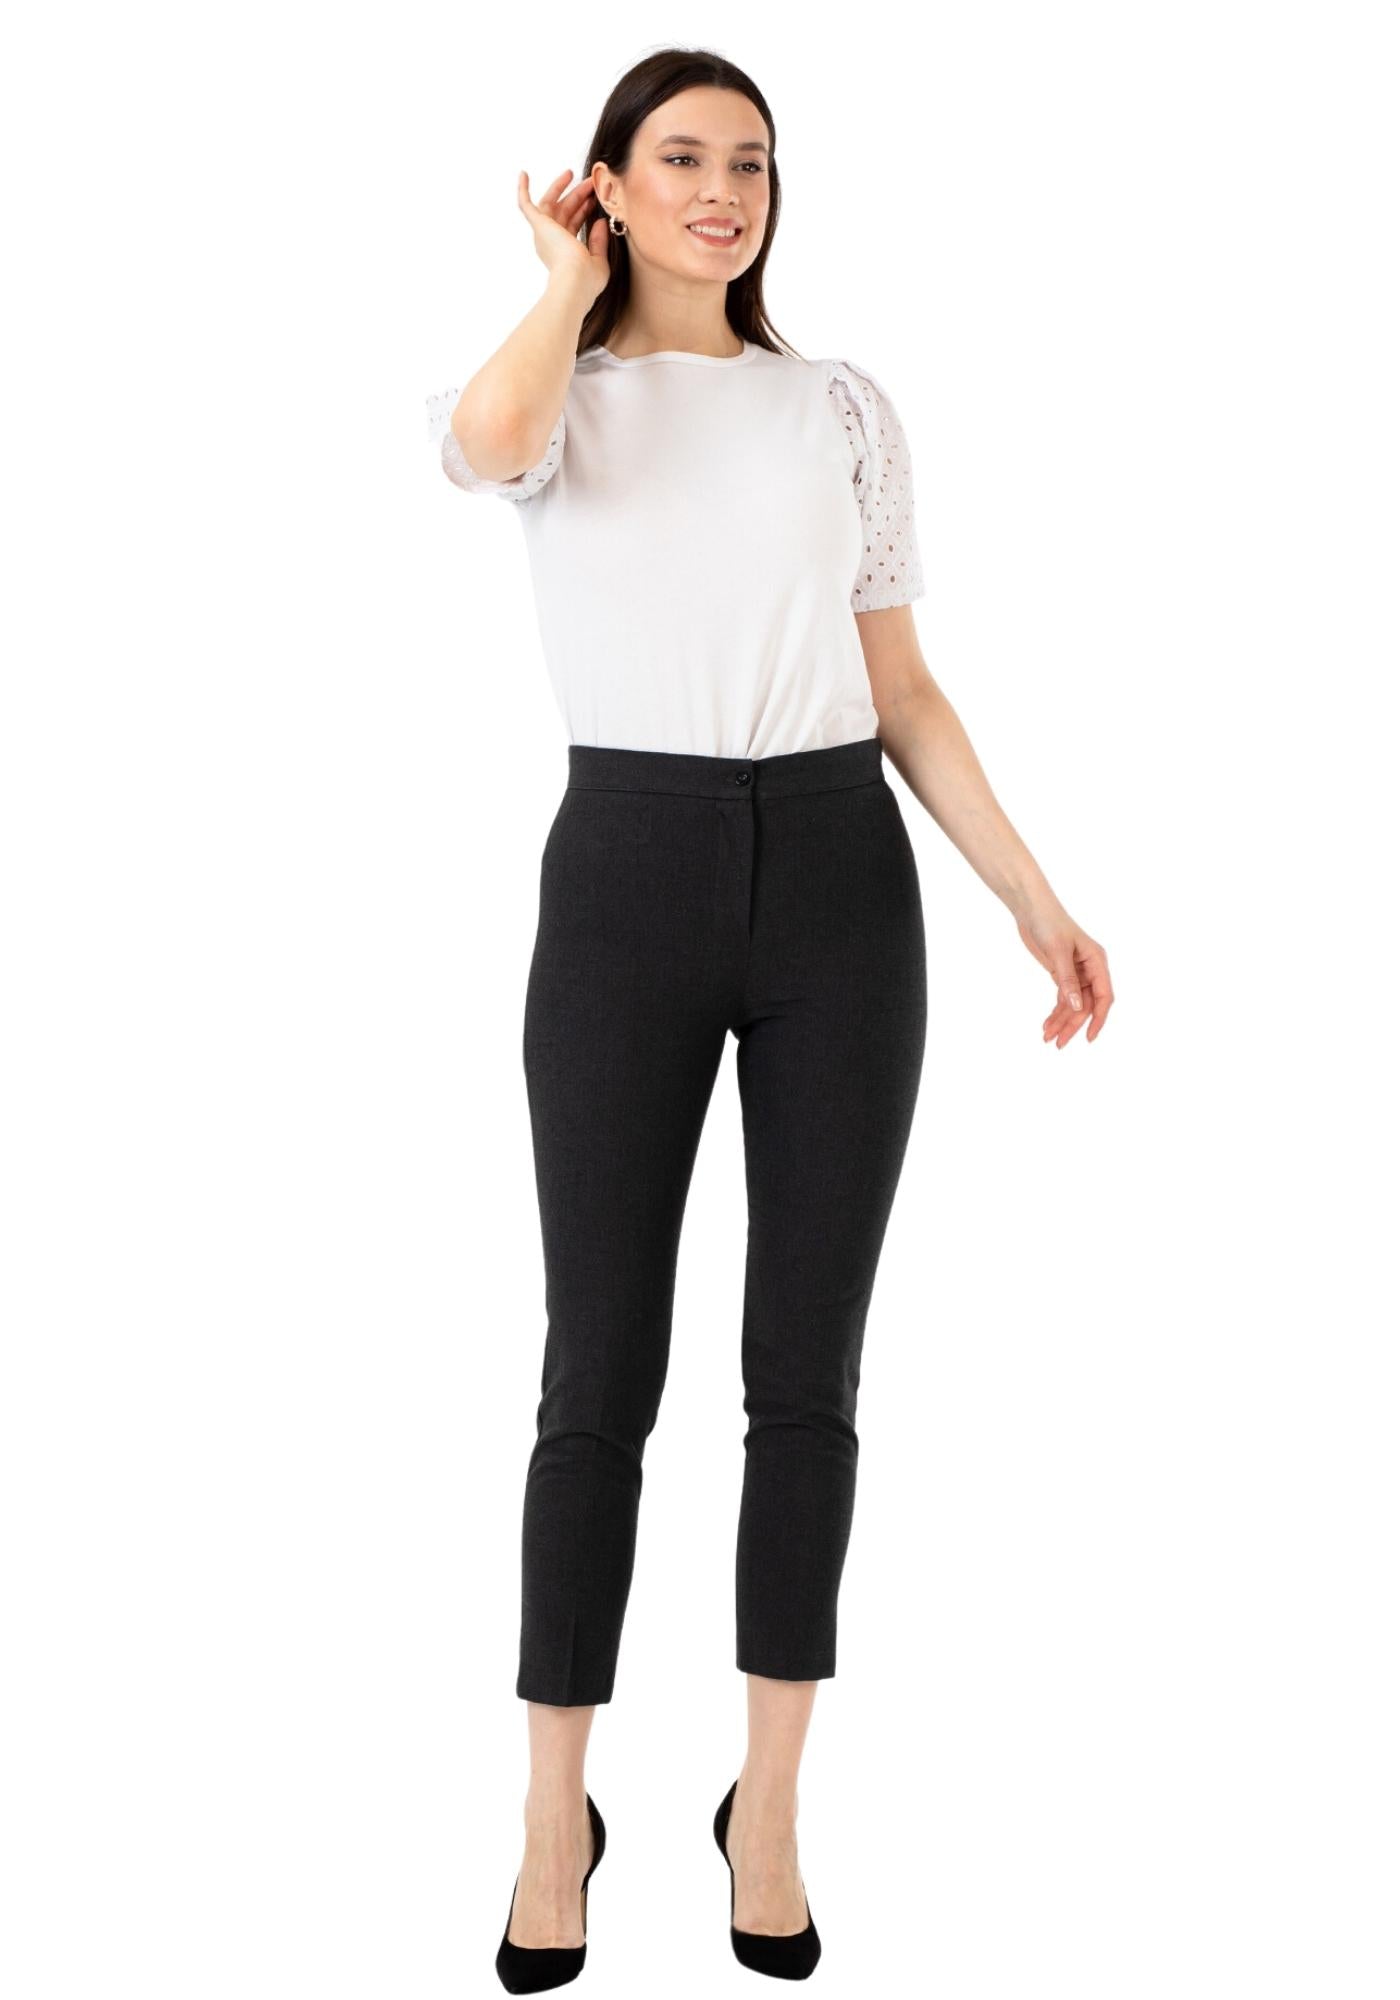 G-Line Women's Charcoal High Waist Slim Fit Stretchy Skinny Work Pants